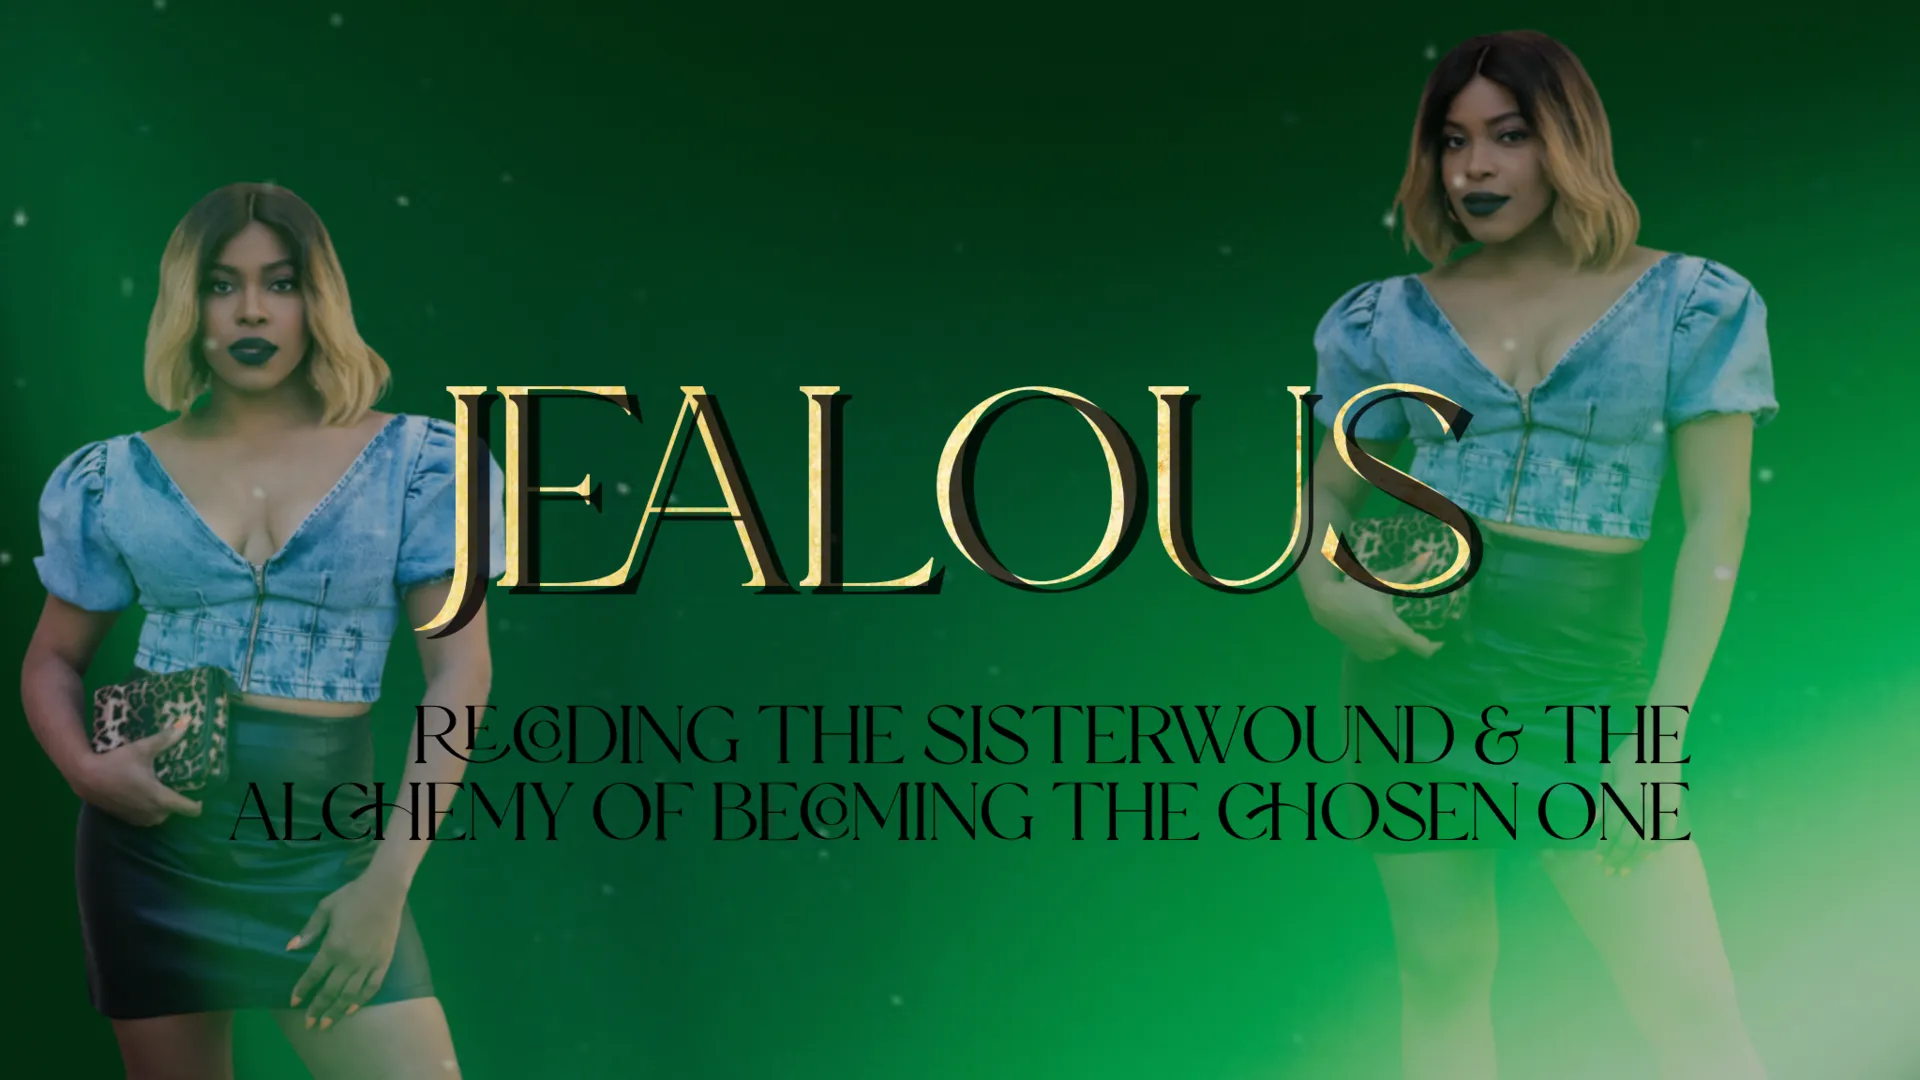 Jealous! The Masterclass - Recoding The Sisterhood Wound